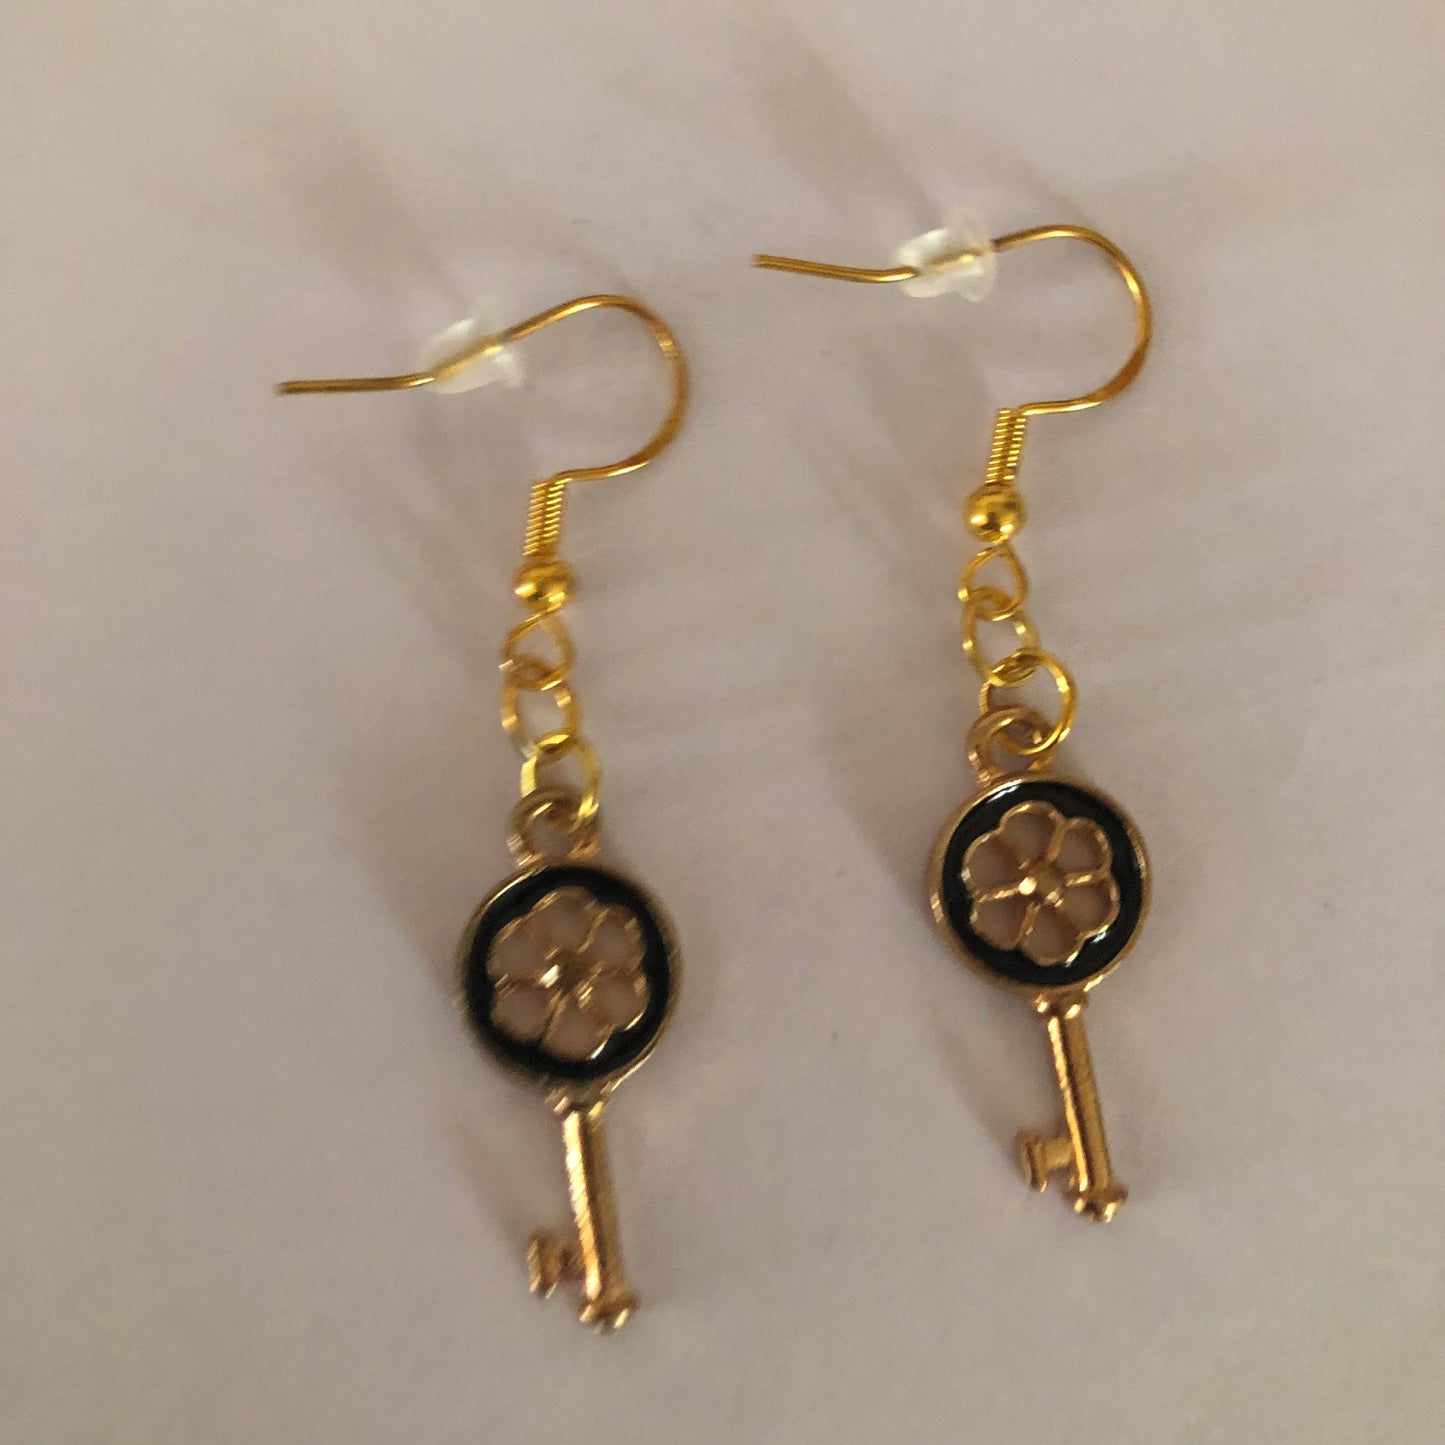 Valentines Day Love key earrings